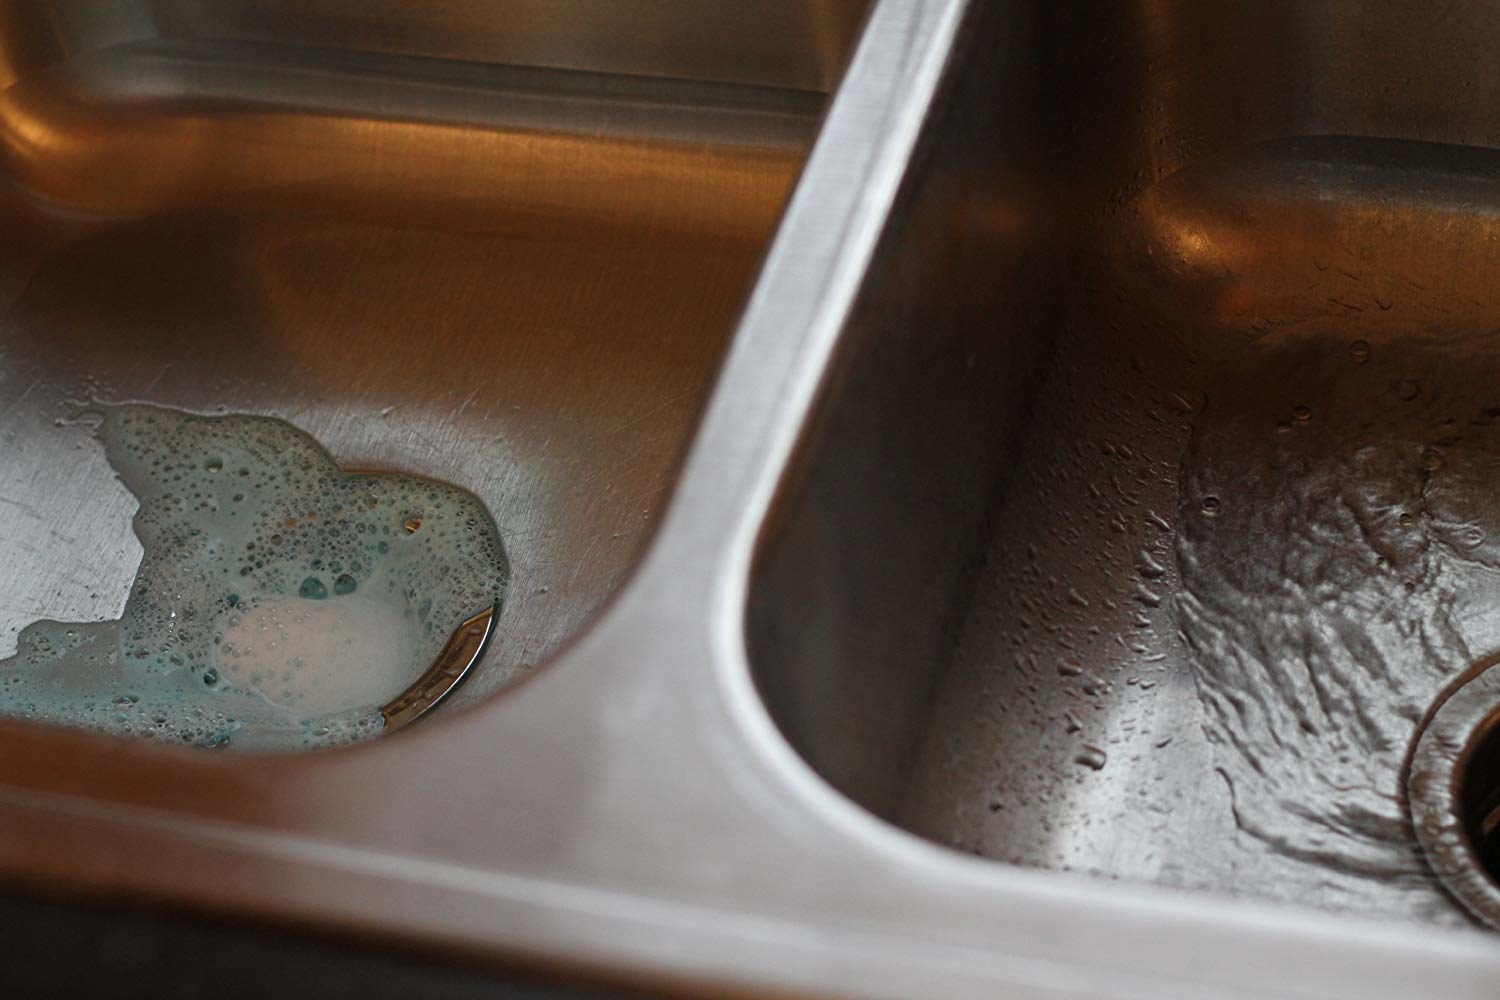 using garbage disposal cleaner in sink